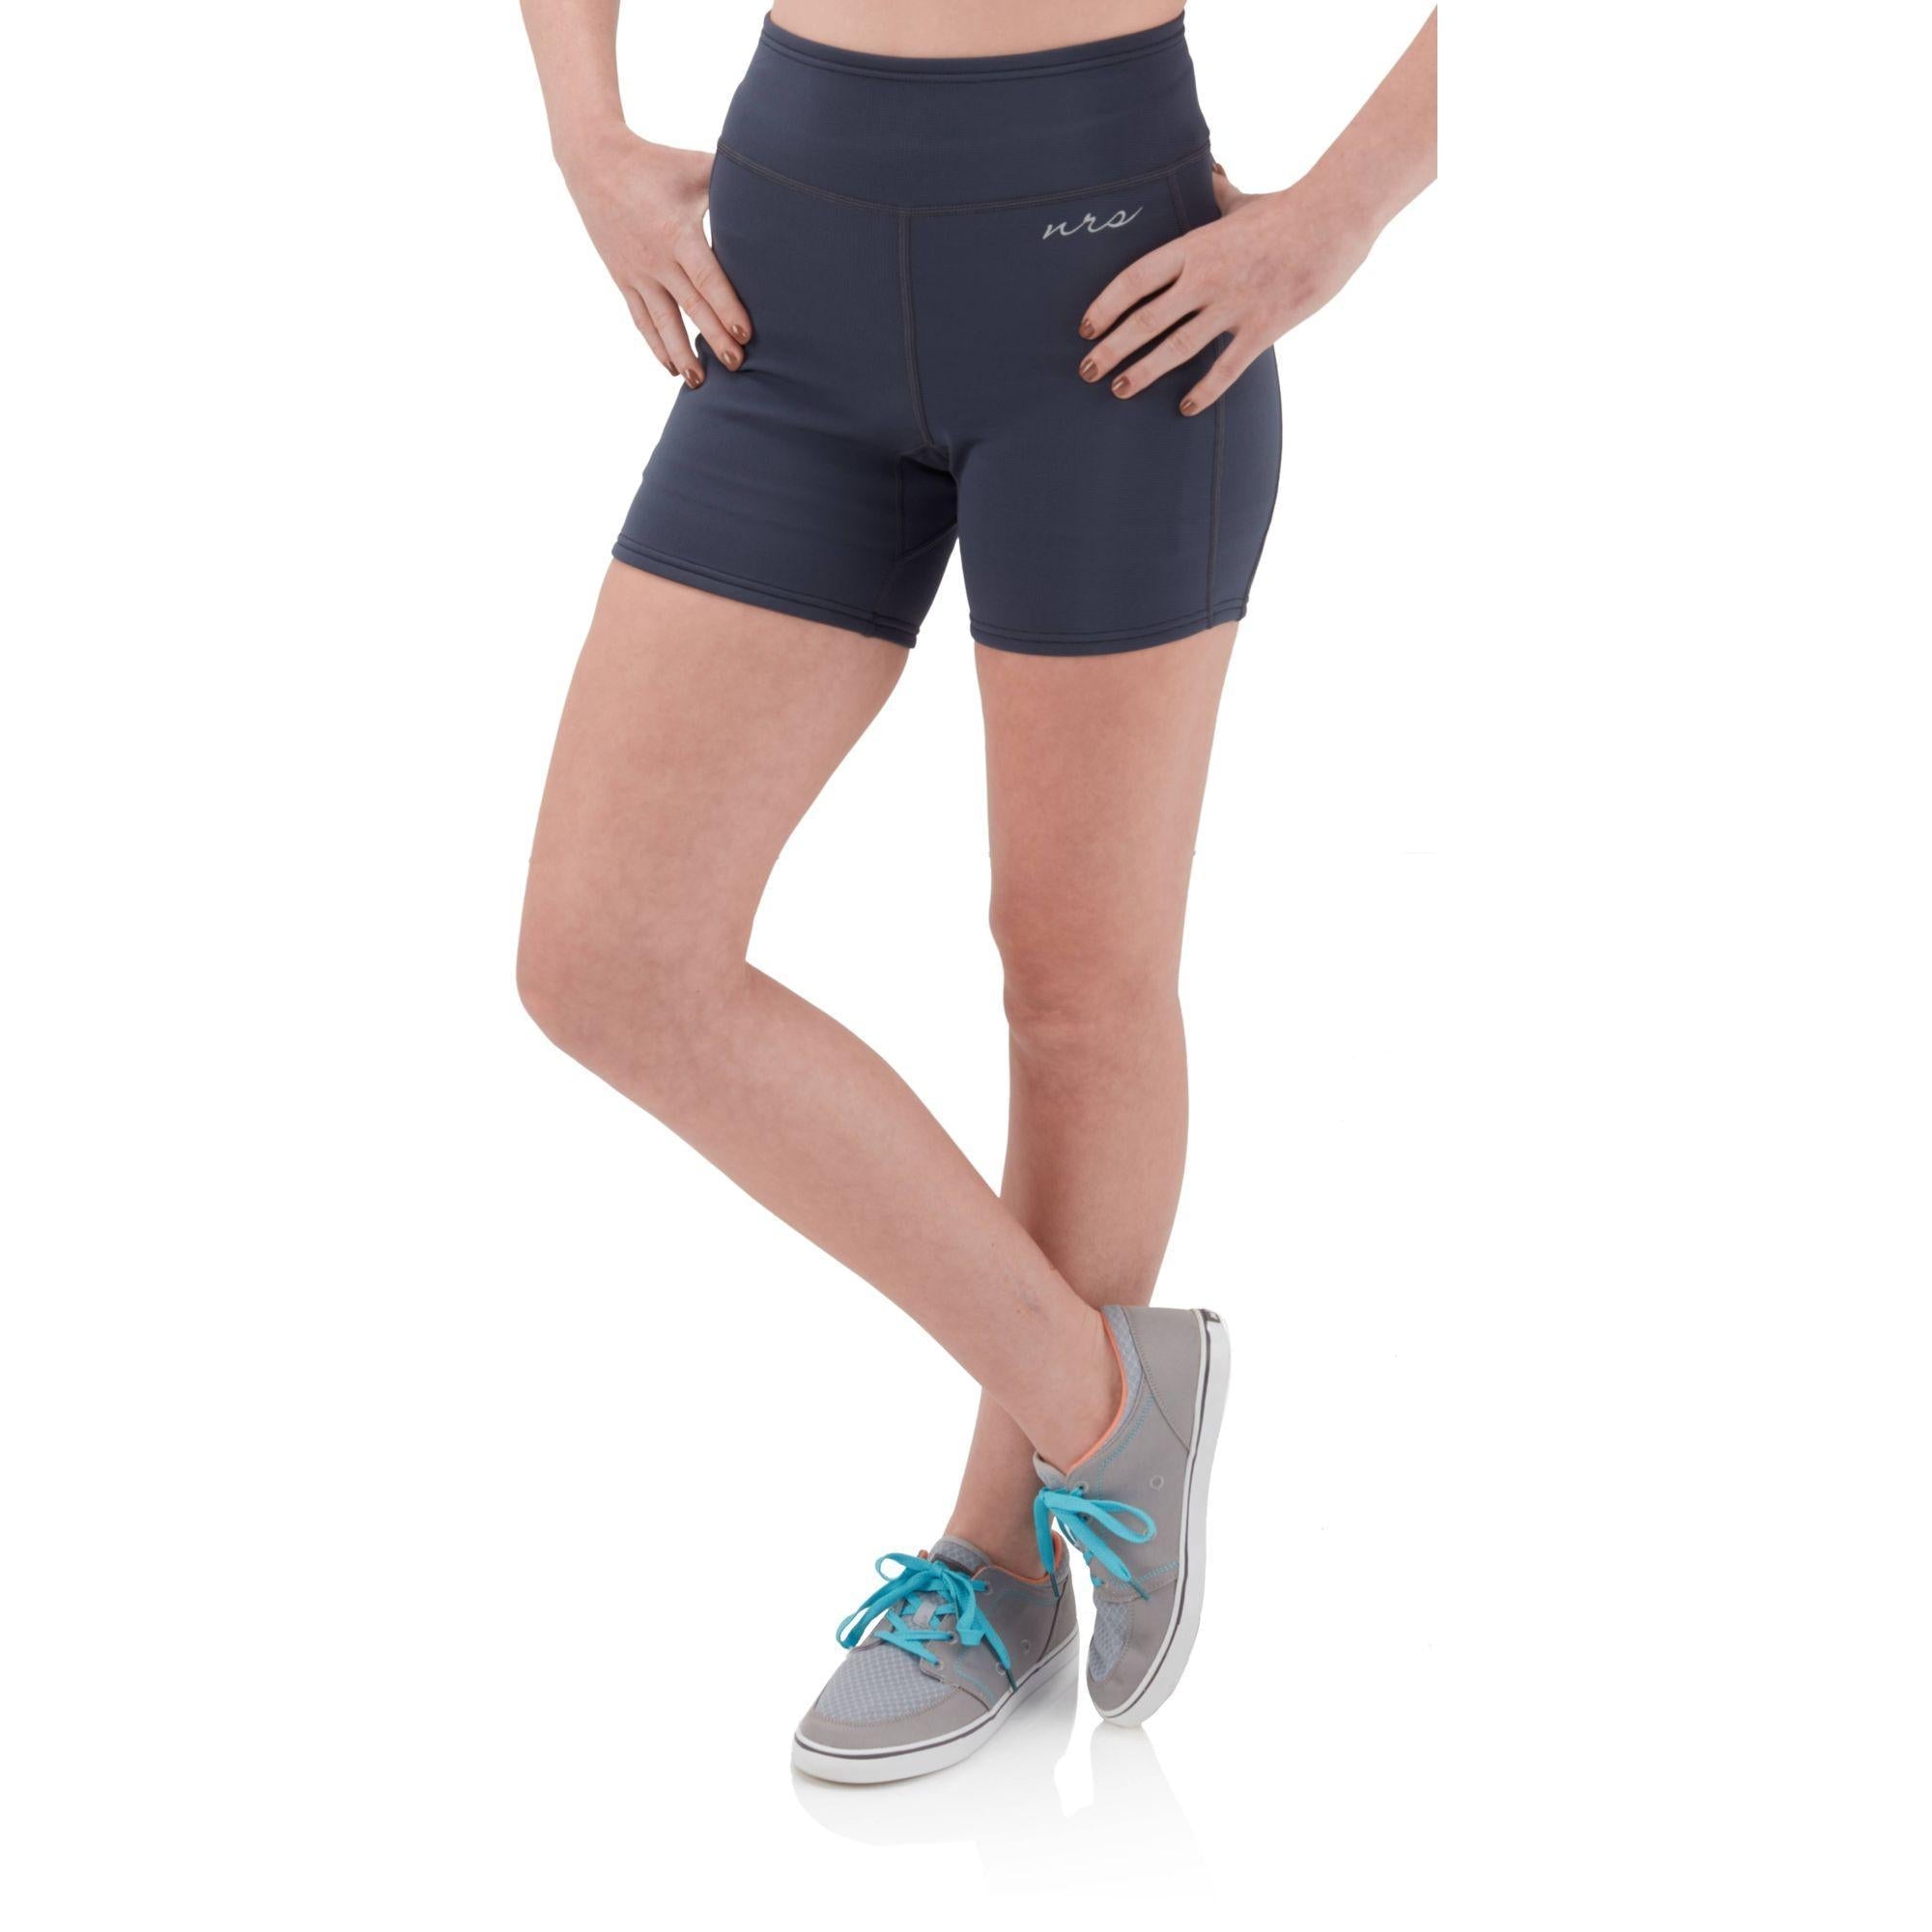 NRS HydroSkin 0.5 Neoprene Shorts, Women's